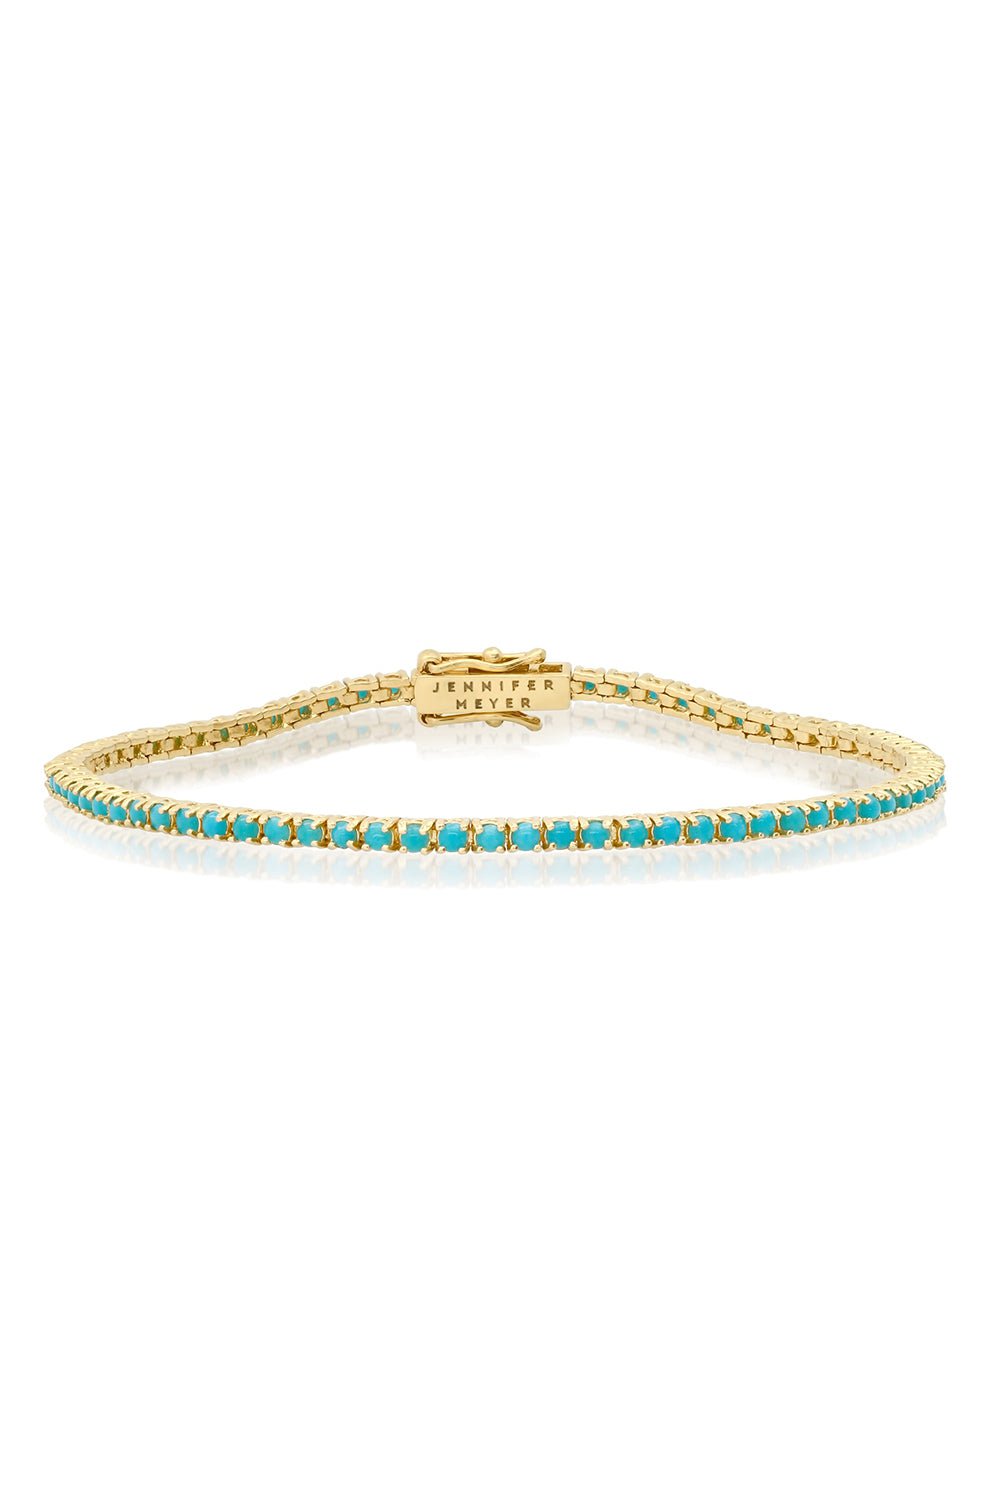 JENNIFER MEYER-Small Turquoise Tennis Bracelet-YELLOW GOLD